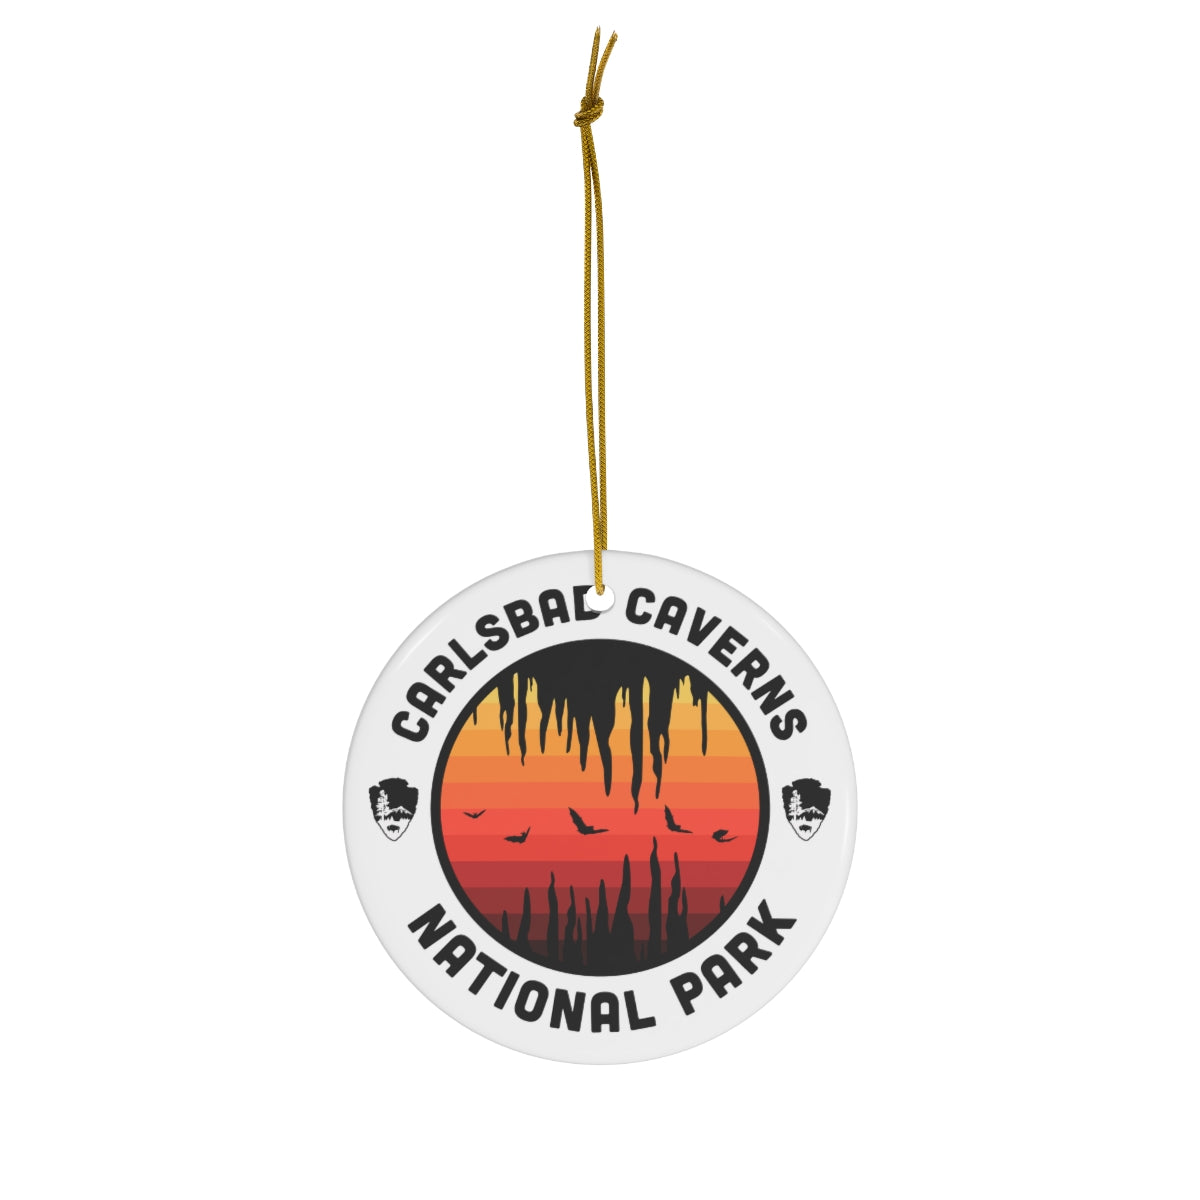 Carlsbad Caverns National Park Ornament - Round Emblem Design